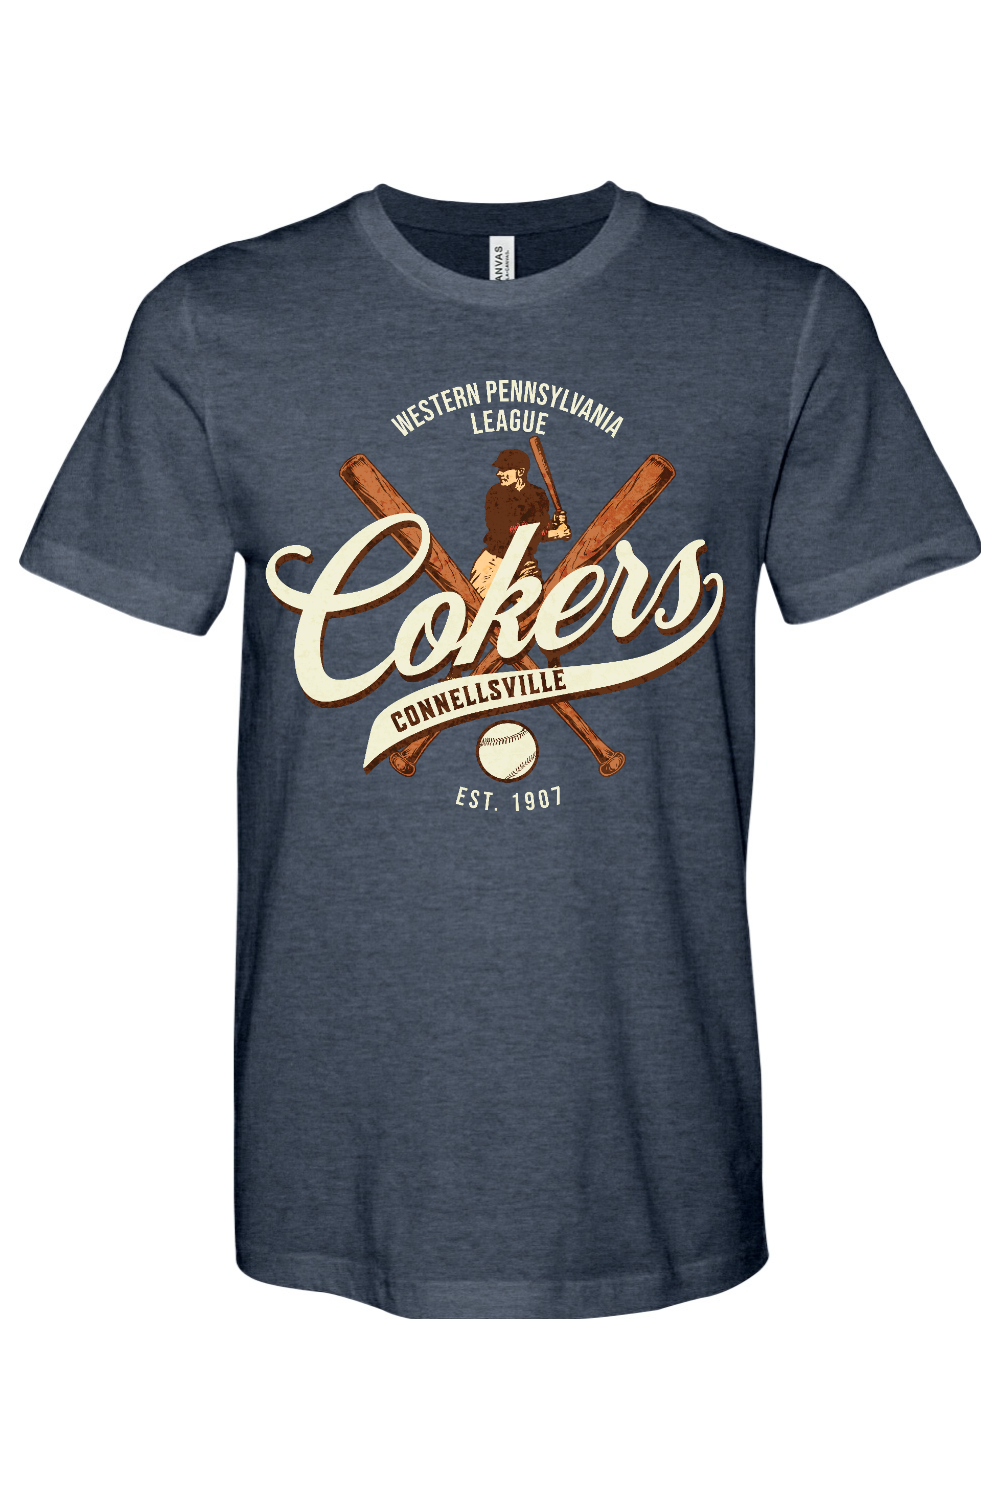 Connellsville Cokers Baseball - 1907 - Yinzylvania